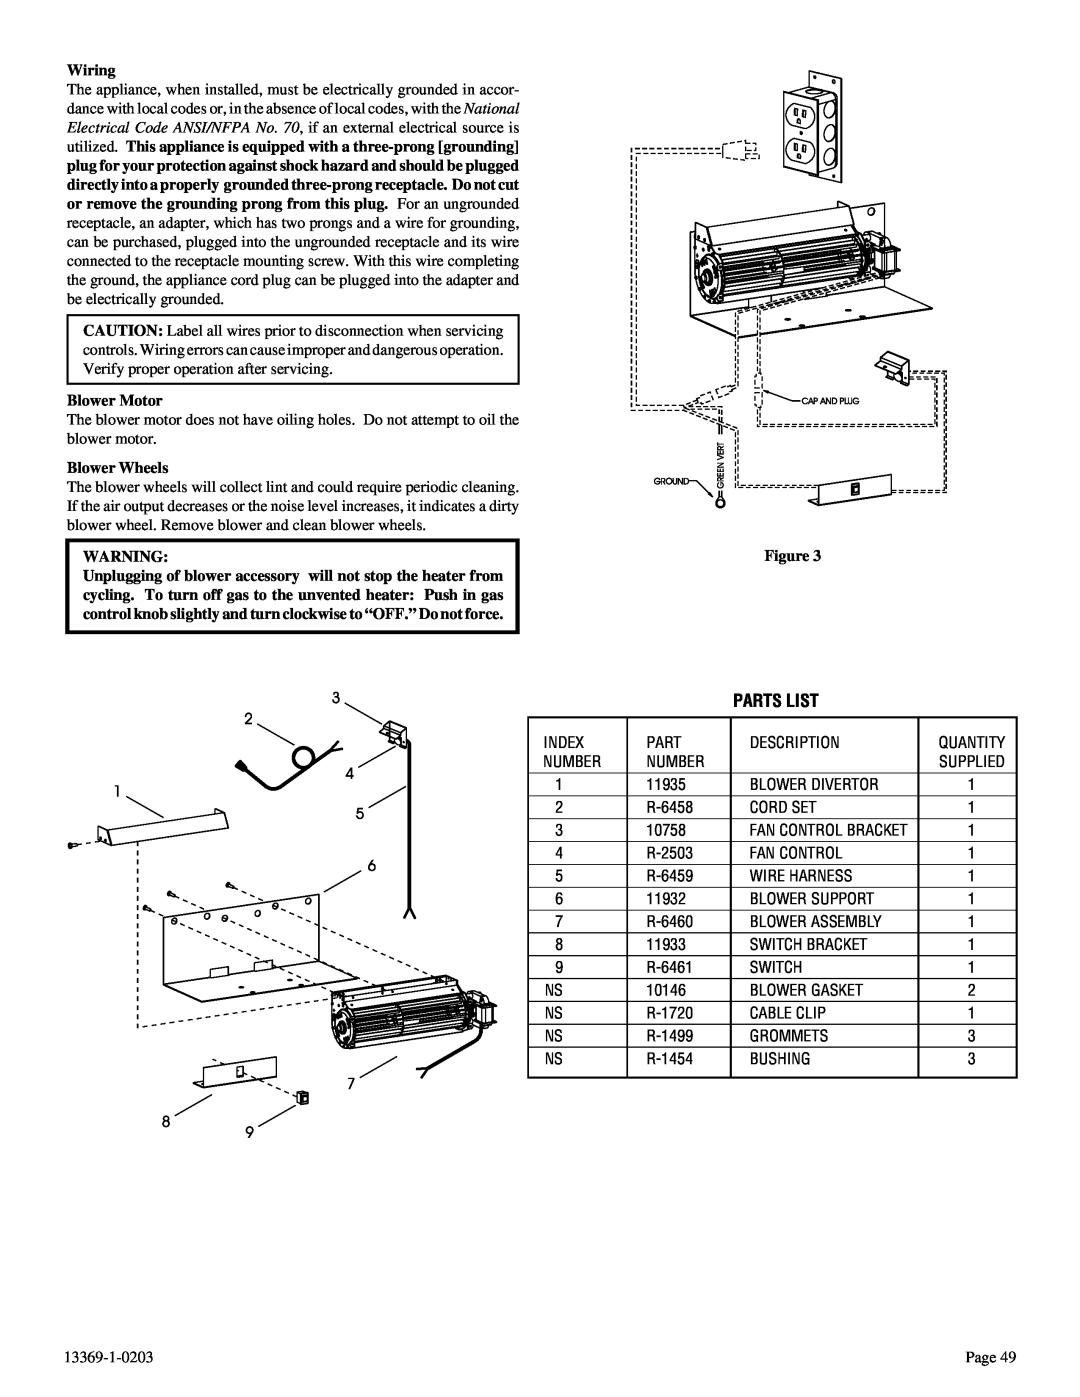 DVS 30-2 installation instructions Parts List, Wiring, Blower Motor, Blower Wheels 